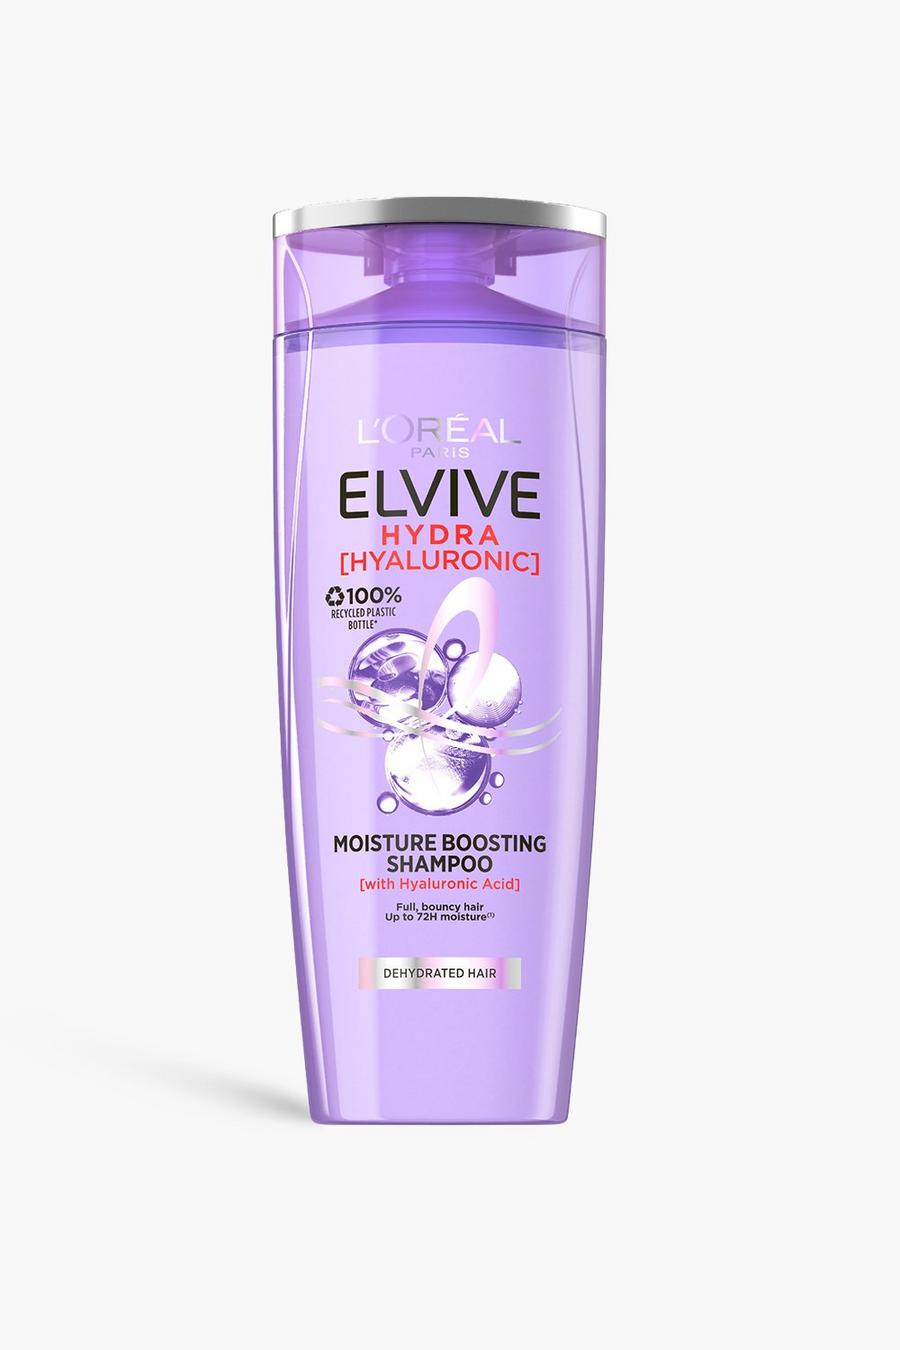 White blanc L'Oreal Elvive Hydra Hyaluronic Acid Shampoo , moisturising for dehydrated hair